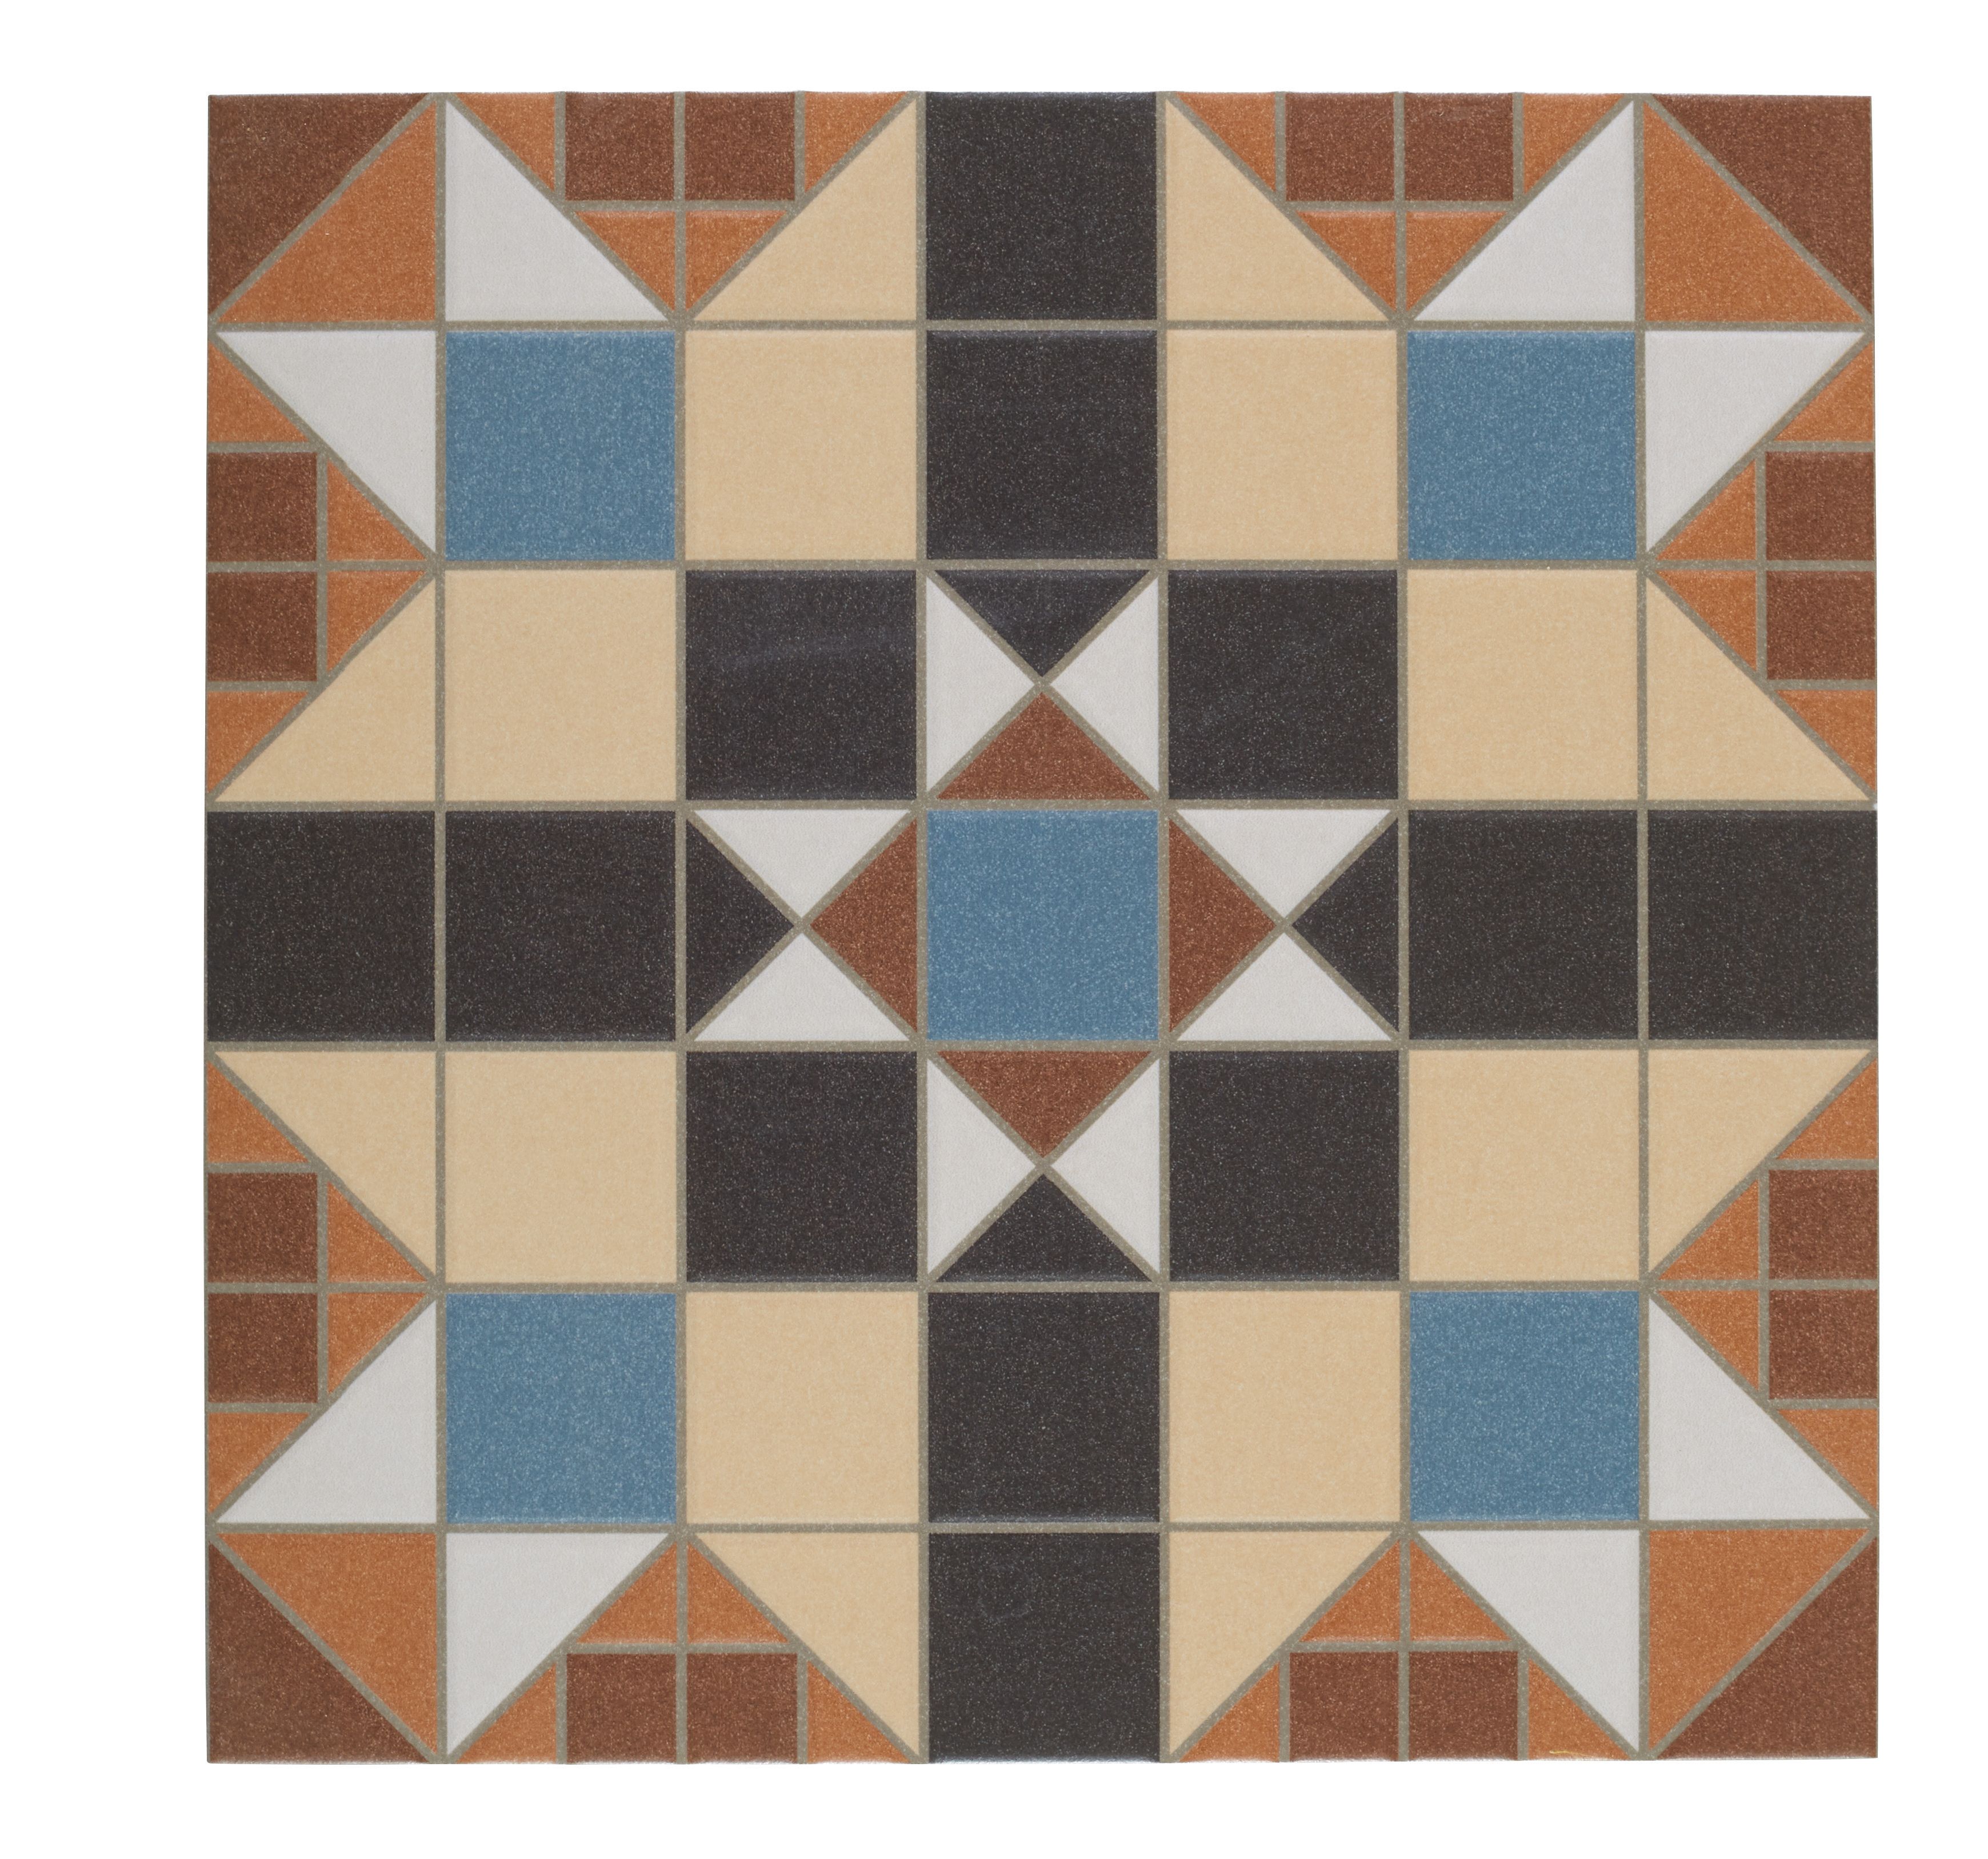 Wickes Dorset Marron Patterned Ceramic Wall & Floor Tile - 316 x 316mm - Sample